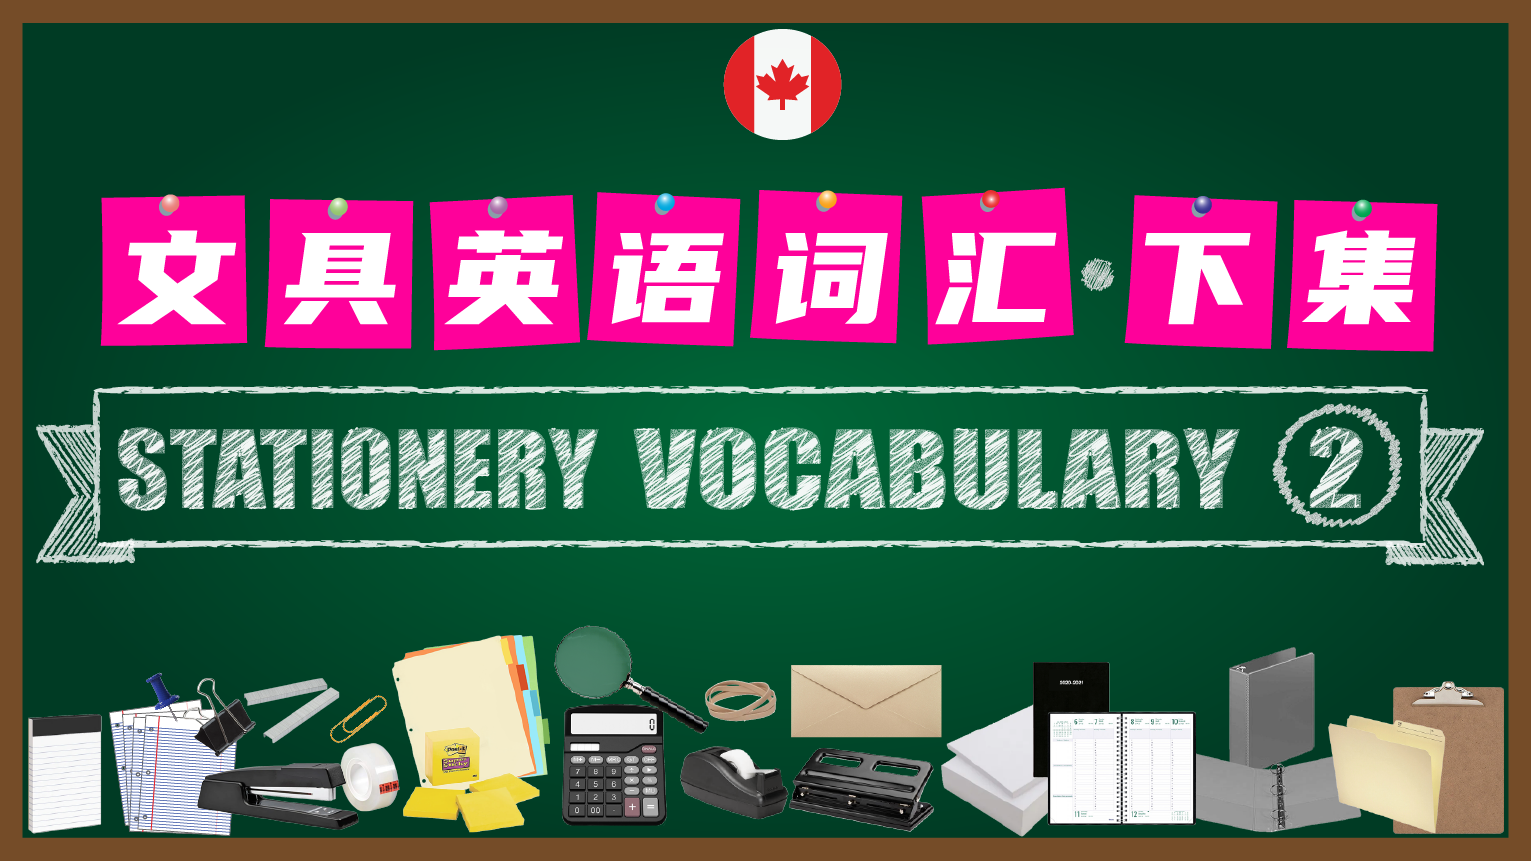 Stationery Vocabulary - Part 2